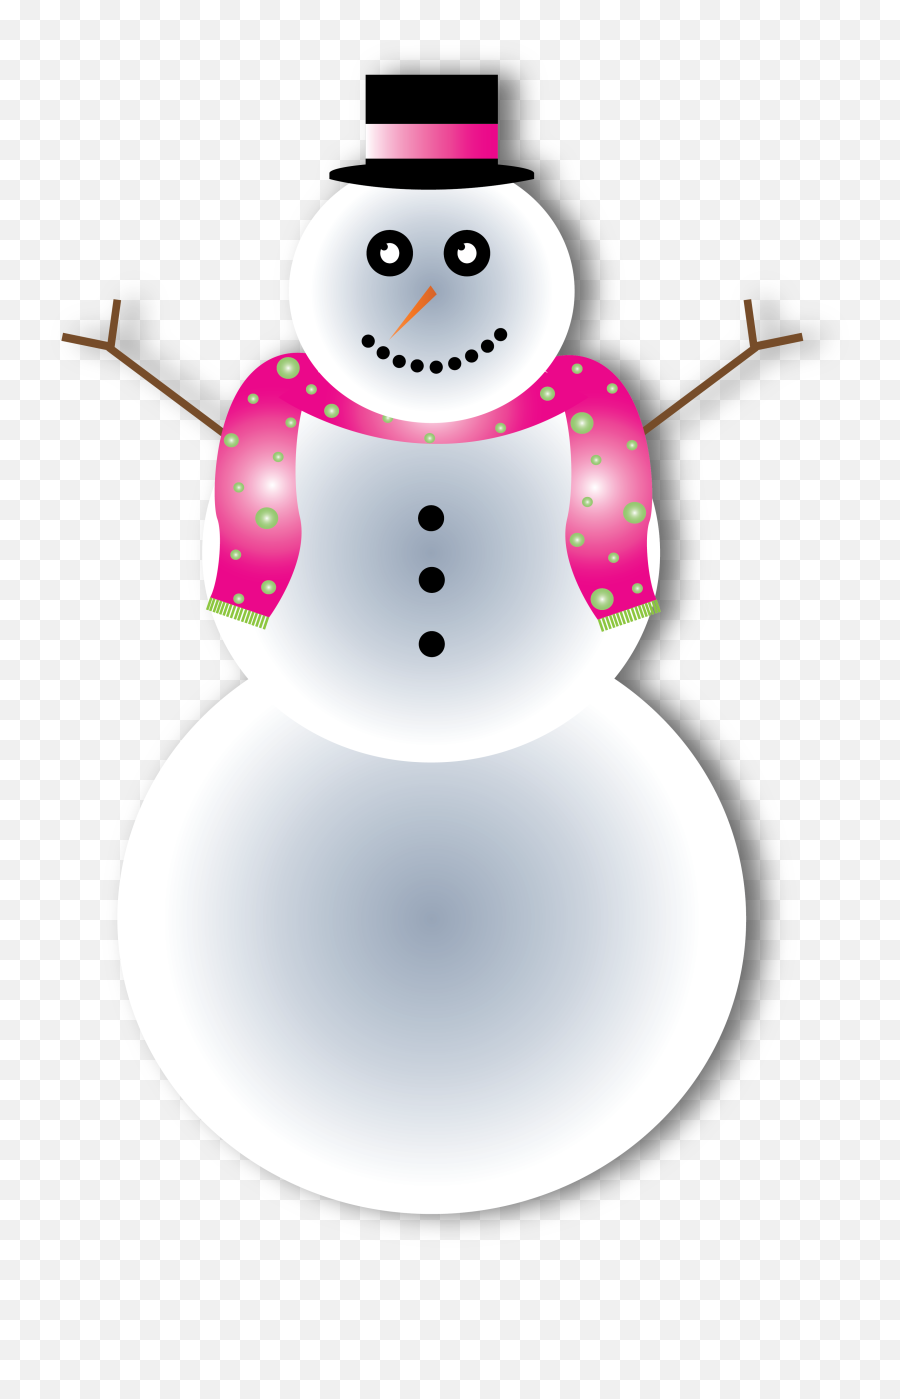 Cartoon Snowman In Hat Free Image - Snowman Emoji,Snowman Emotions